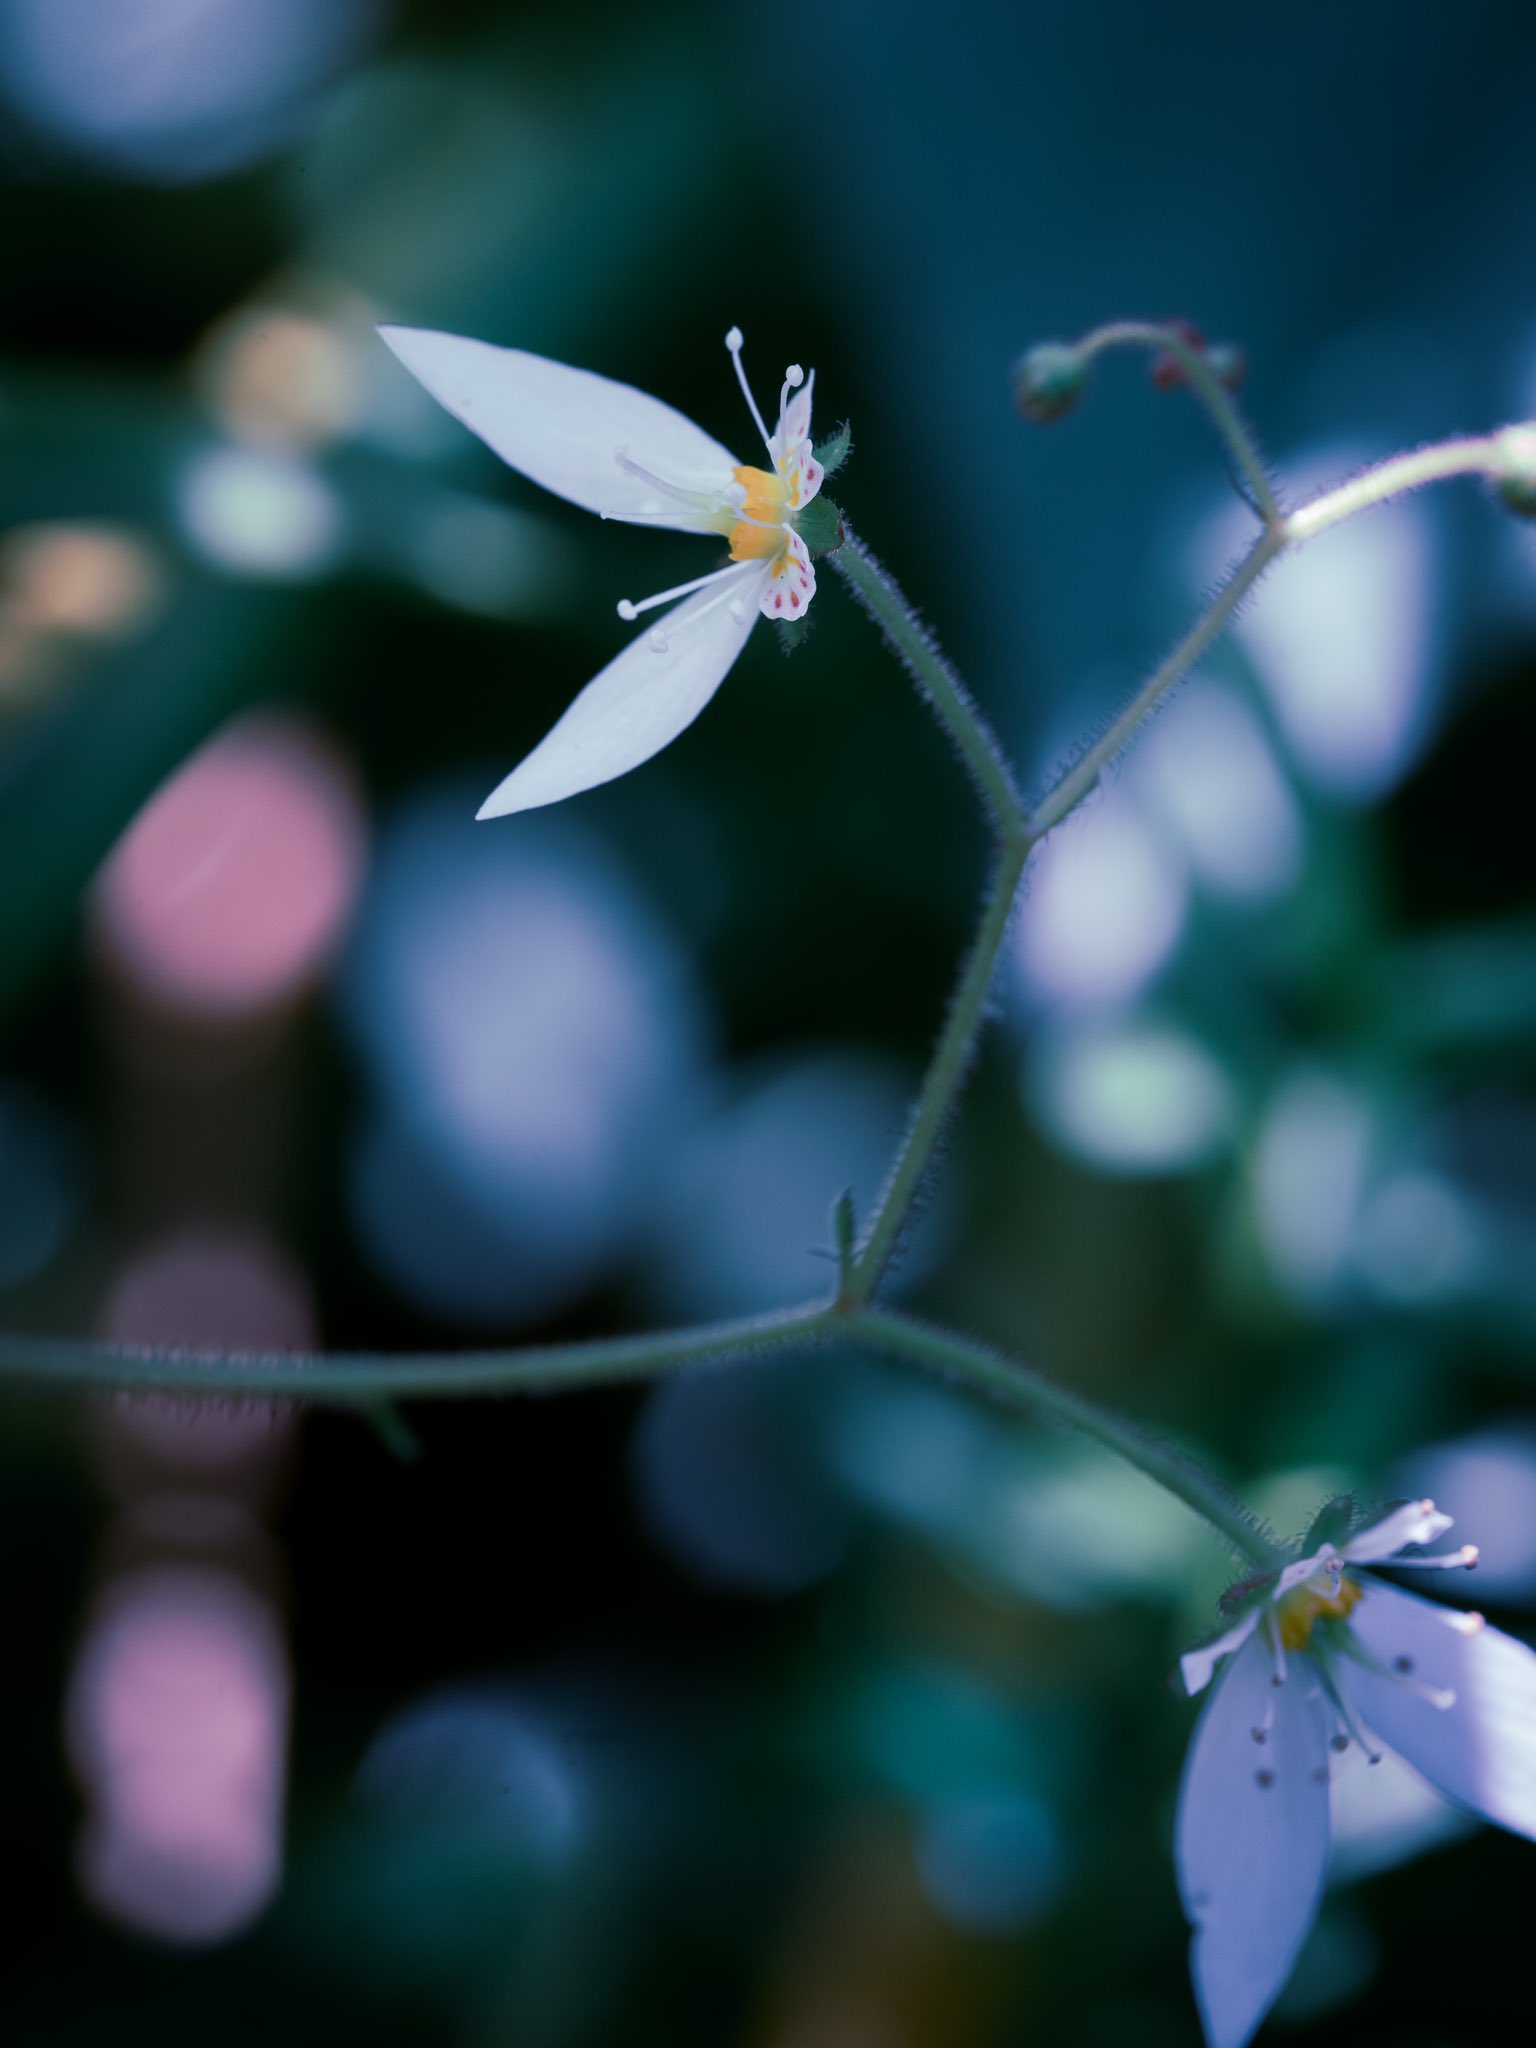 Takao 雪ノ下 ユキノシタが咲いていました 日本の在来種 ユキノシタ科 俳句では鴨足草と書いてユキノシタと読みます 英語名はbeefsteak Geranium とのことですが花弁の斑点を に見立ててのことでしょうか 由来をご存知の方教えていただけると